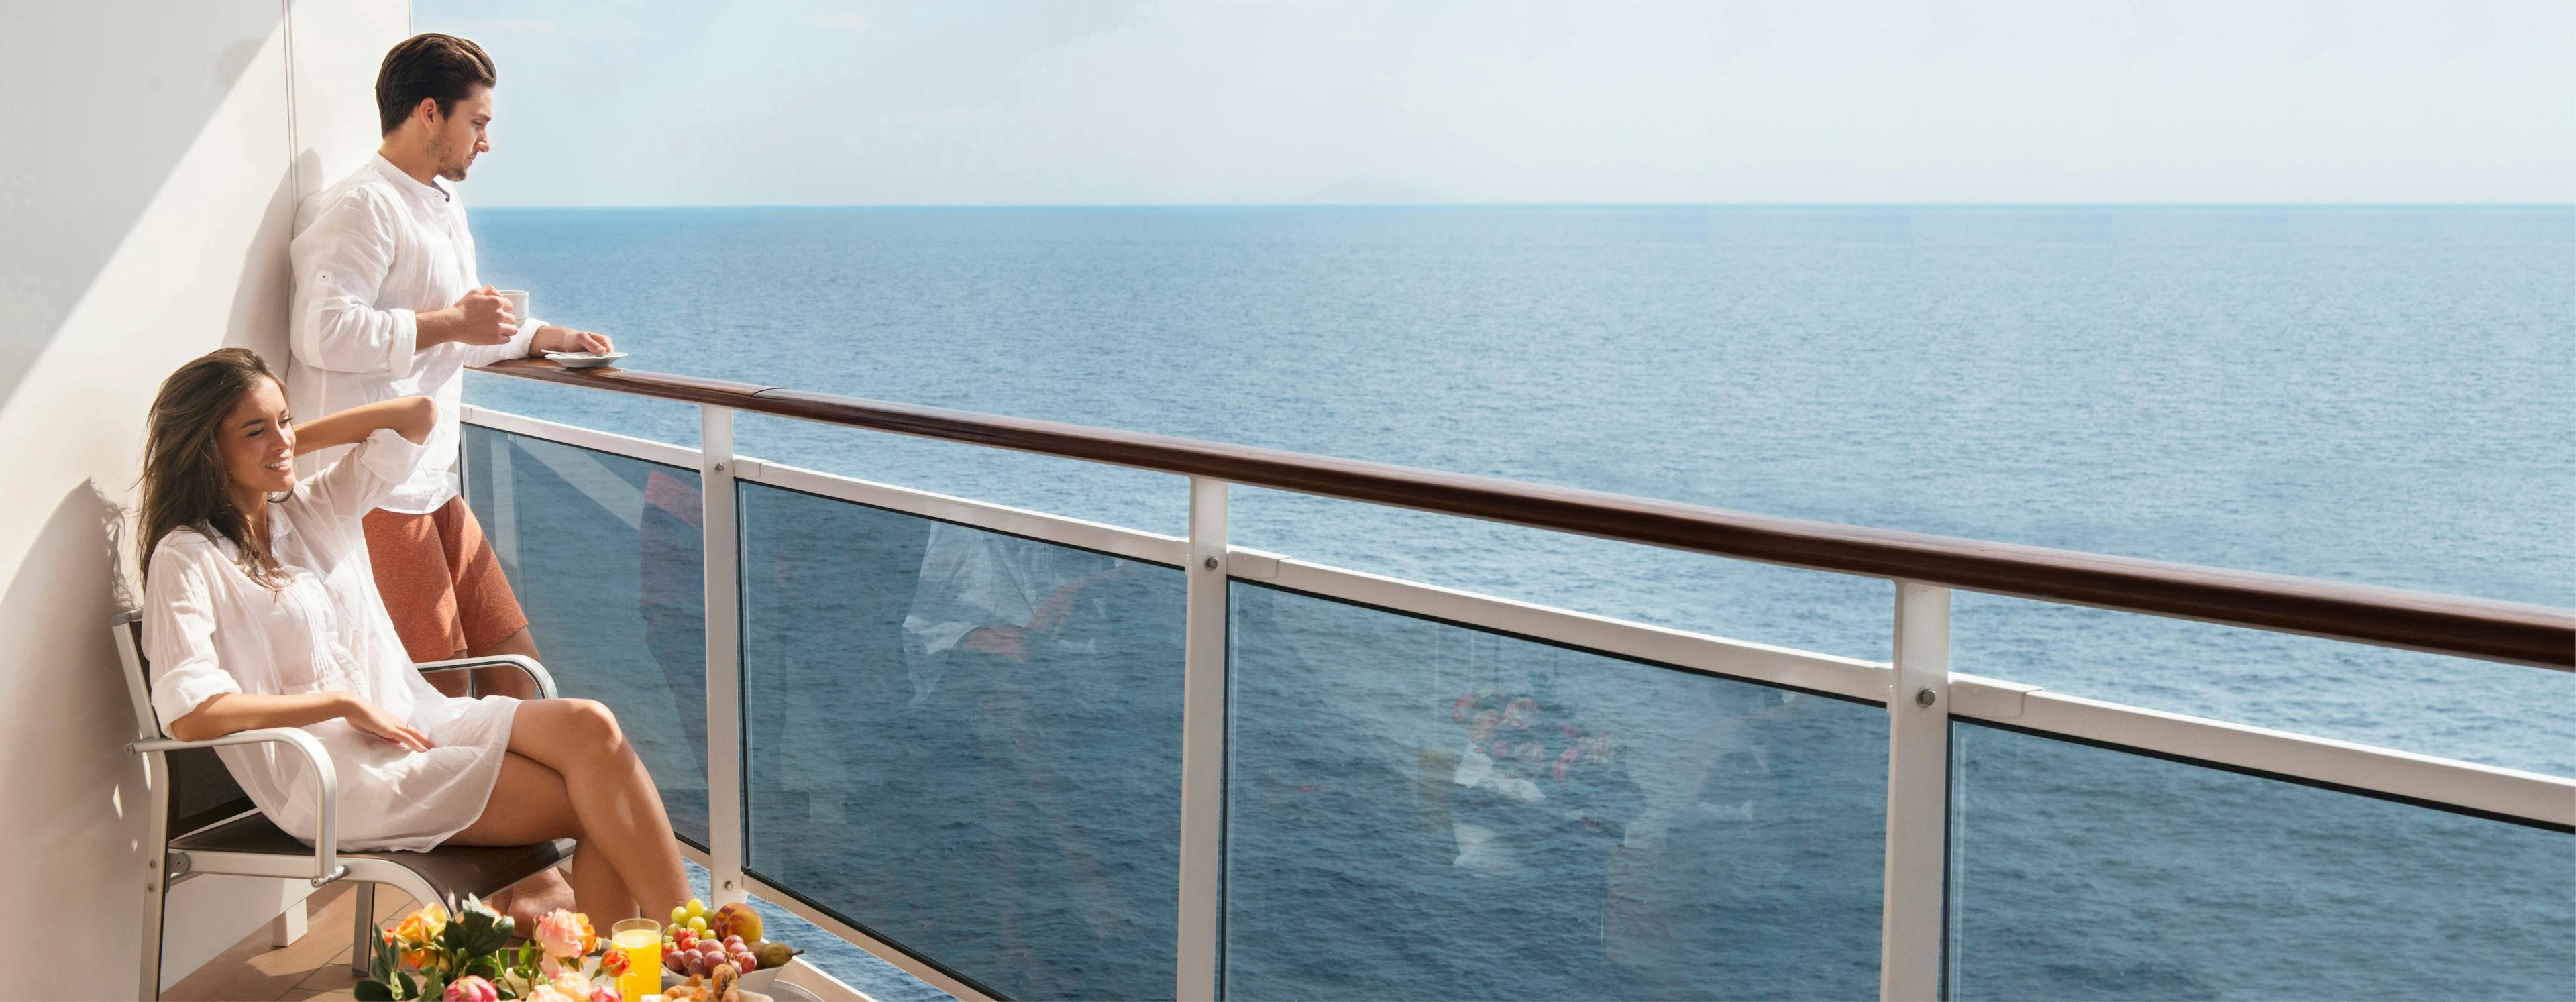 Best Honeymoon Cruises preview image